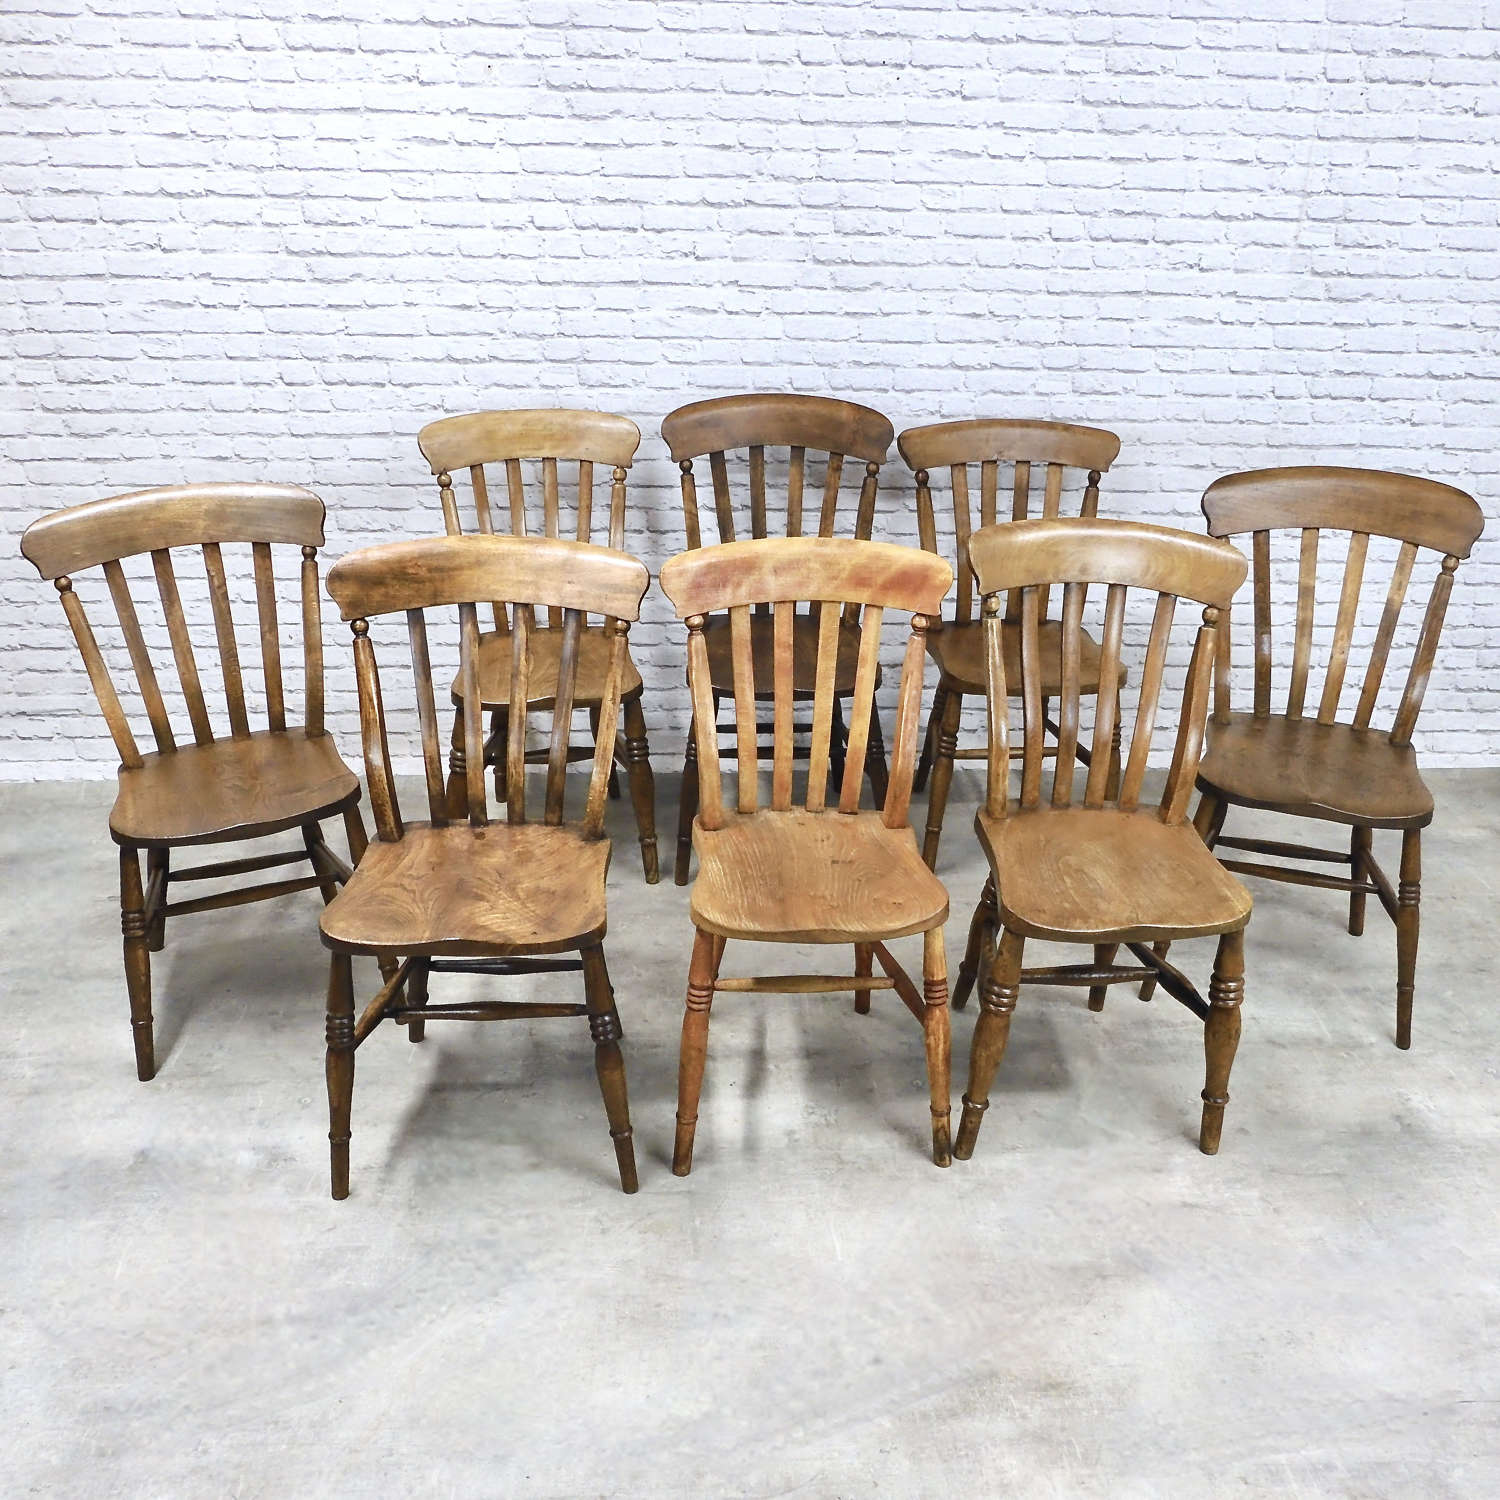 8x Windsor Lathback Chairs